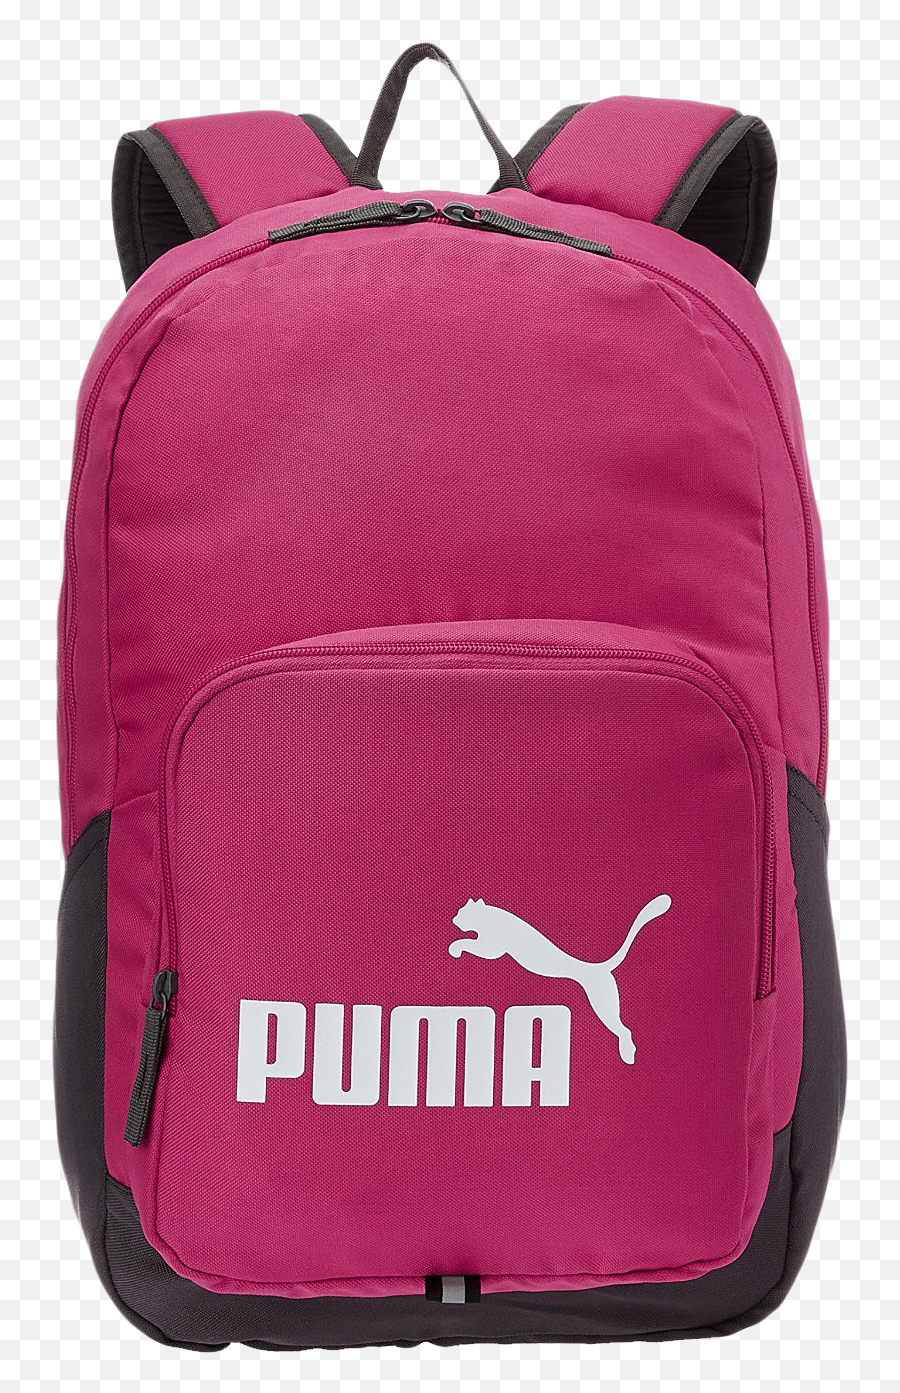 Download Puma Travel Bag Png Image For Free - Png Images Of Bag,Puma Png